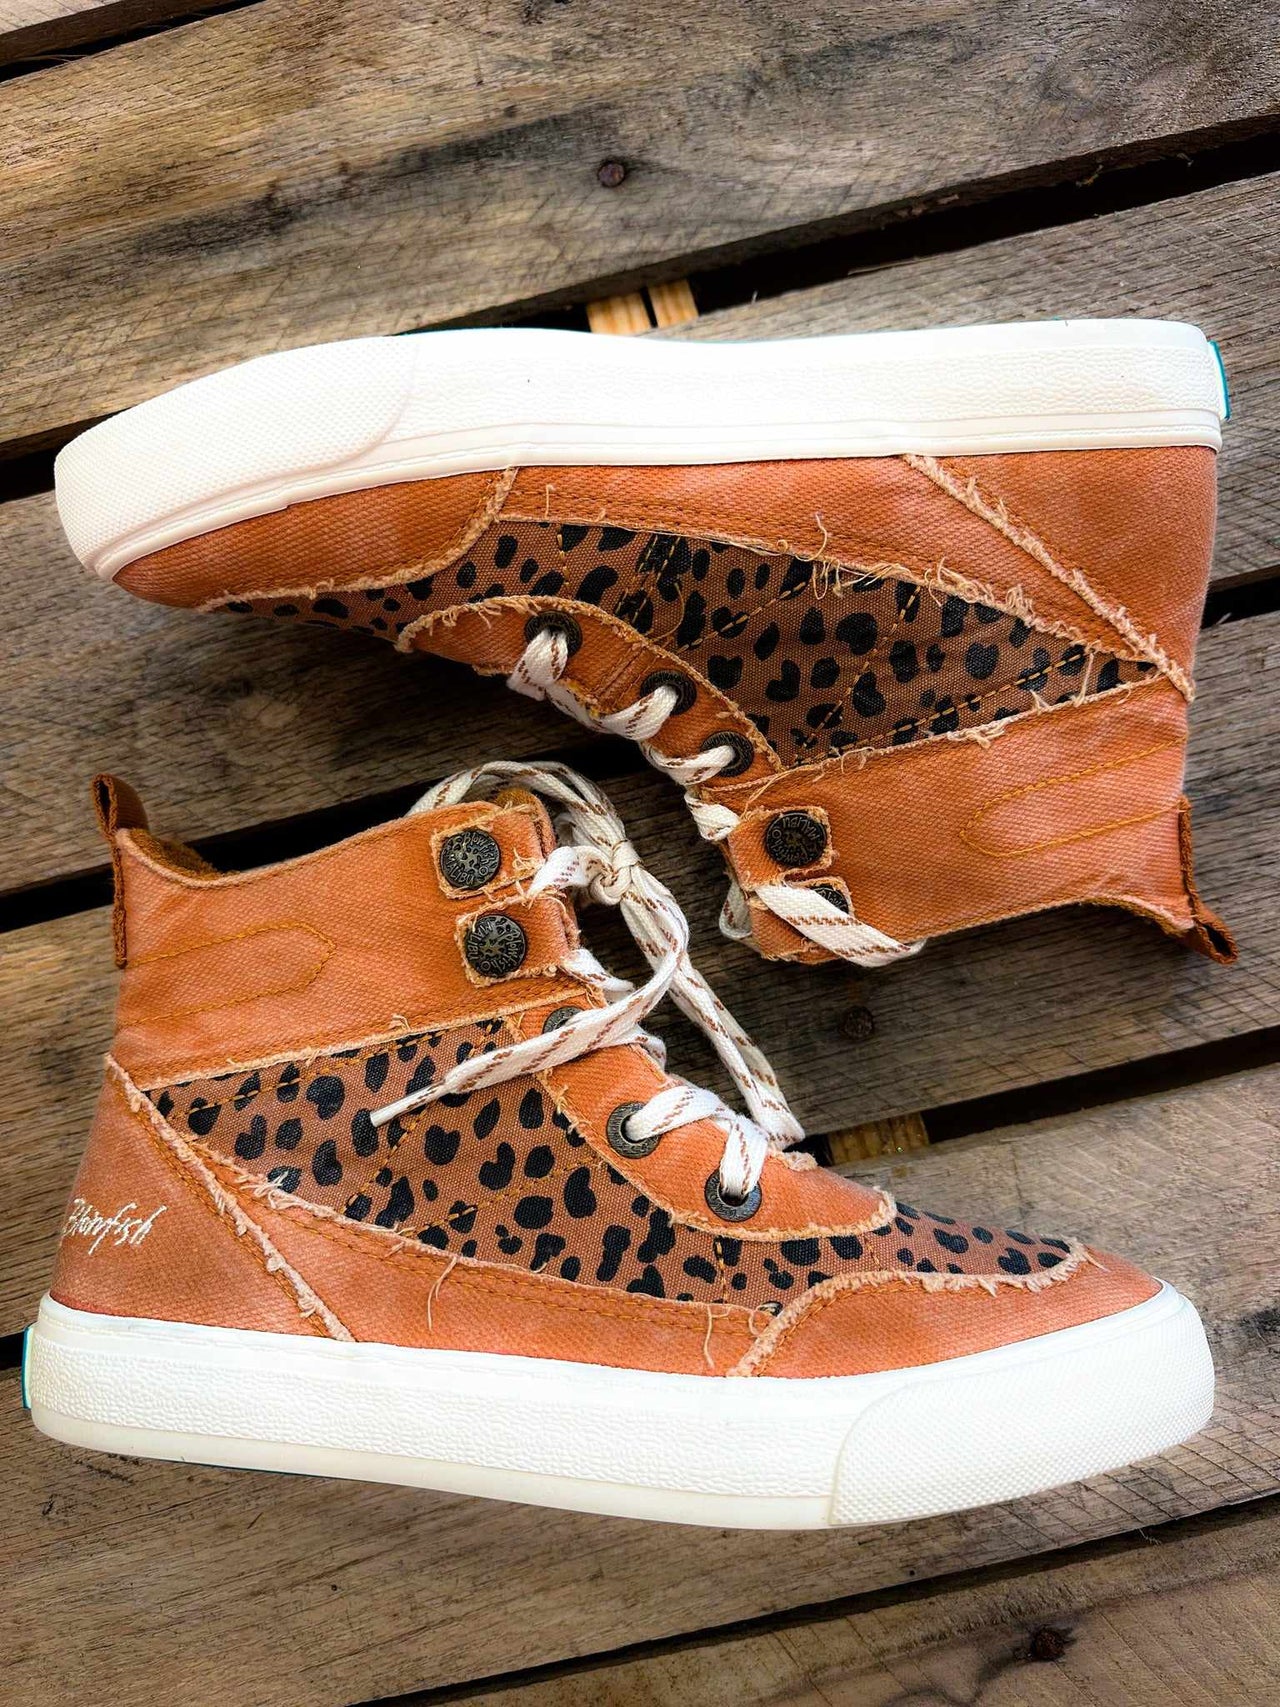 Uplander Caramel Leopard High Top Sneakers